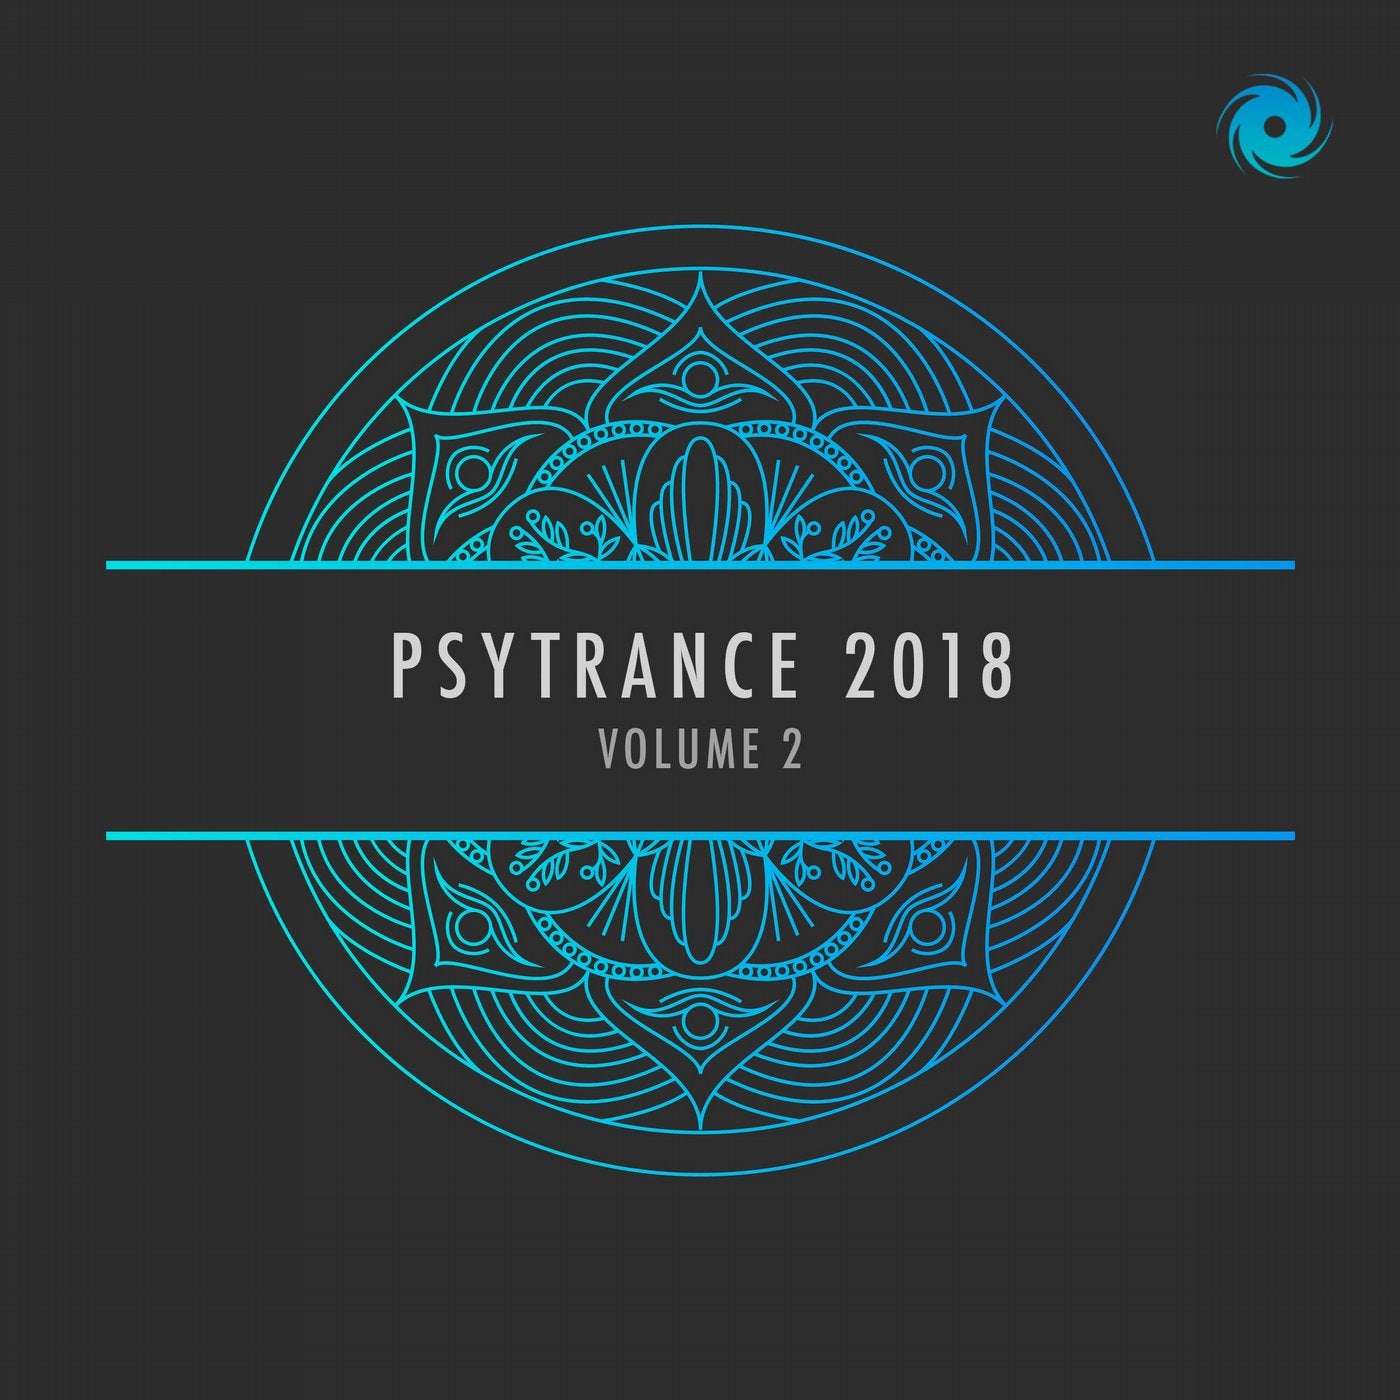 Psytrance 2018 Volume 2